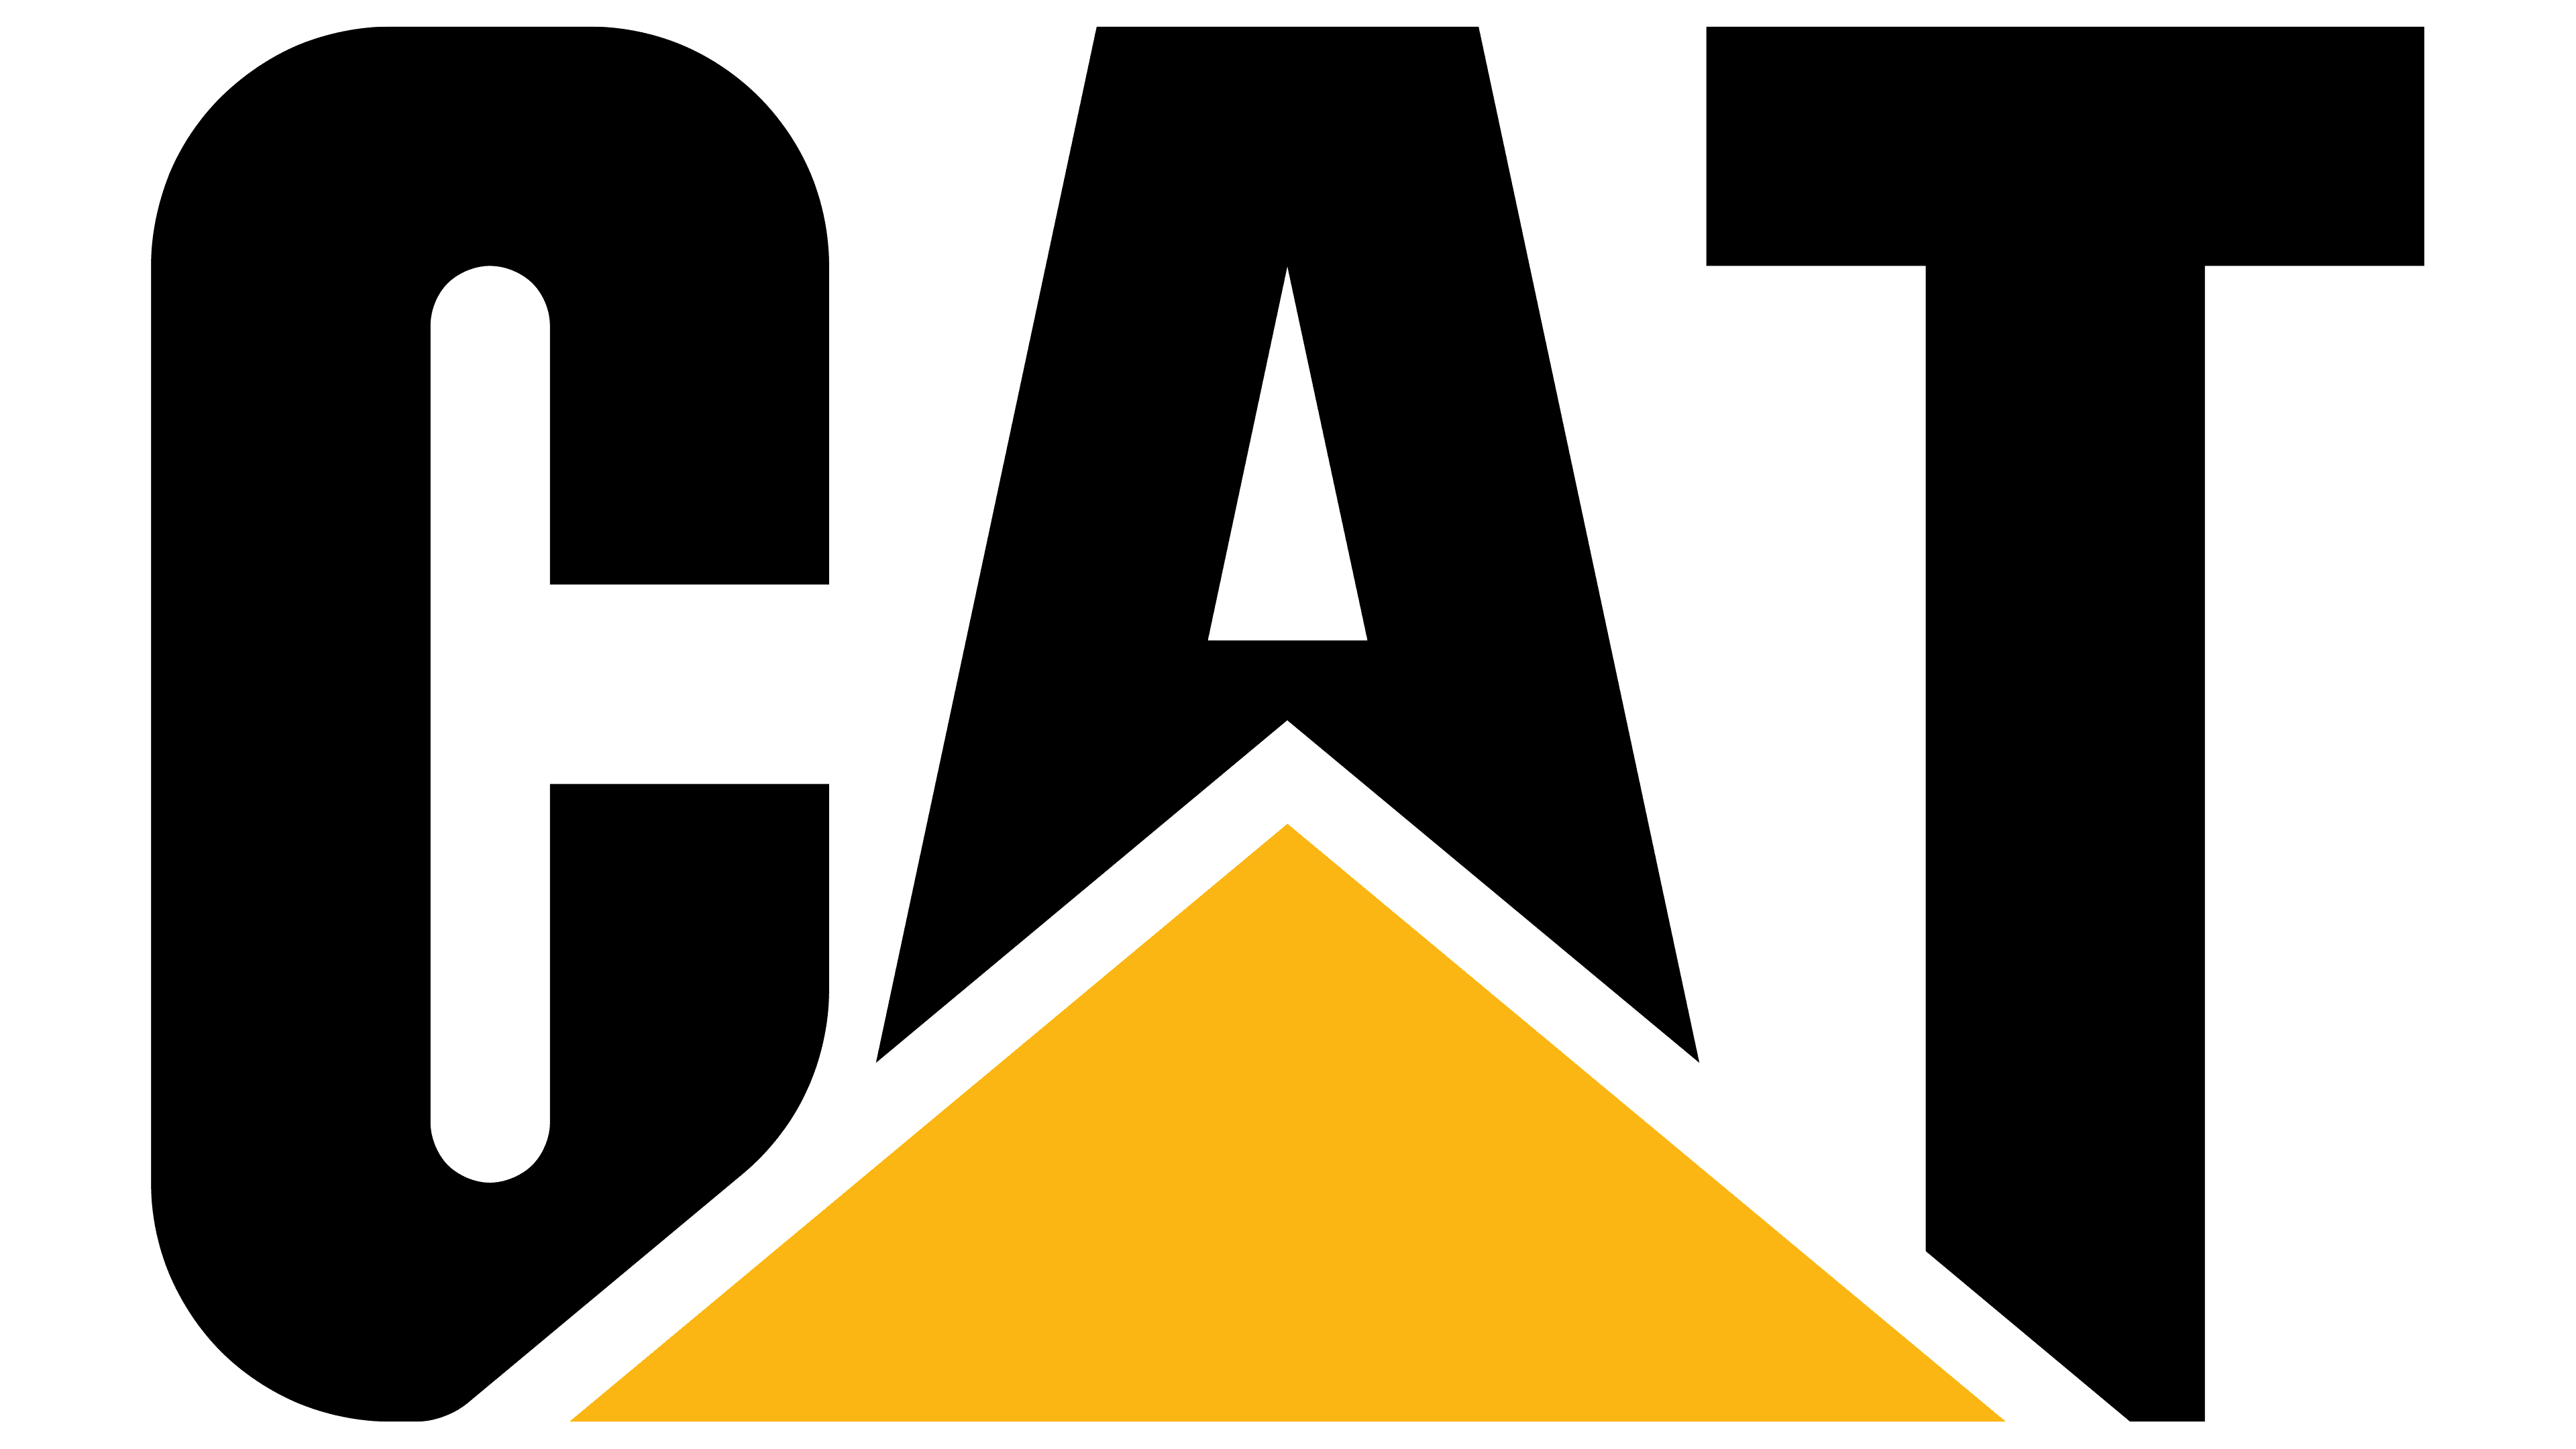 CAT Logo: Recognizable emblem of the CAT brand